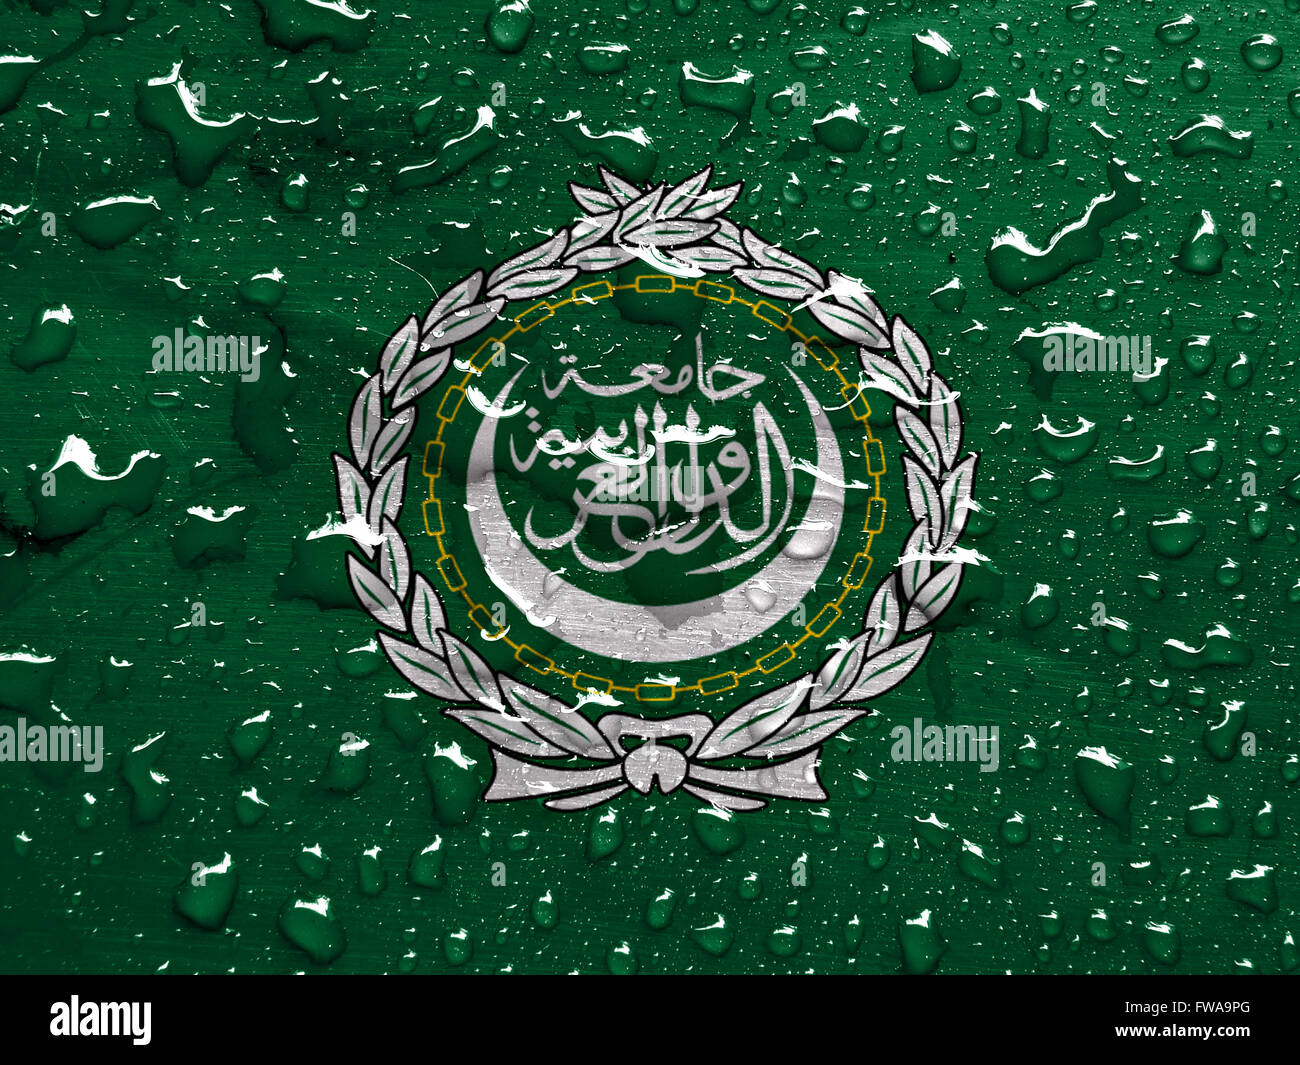 flag of the Arab League with rain drops Stock Photo